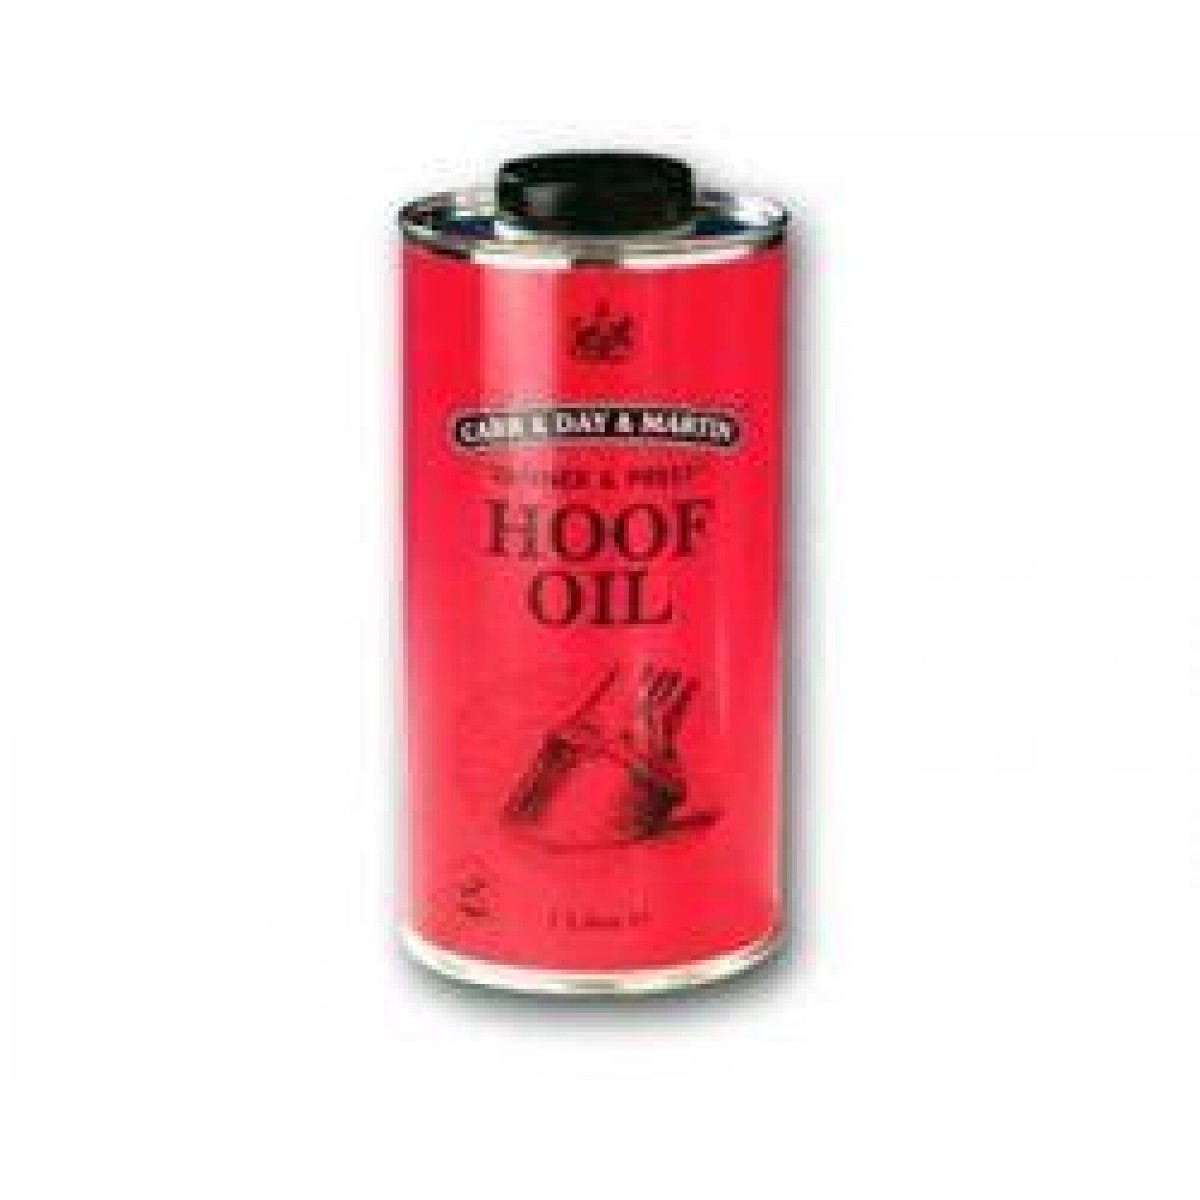 Klassisk hov olie (Vanner & Prest hoof oil), 500 ml.